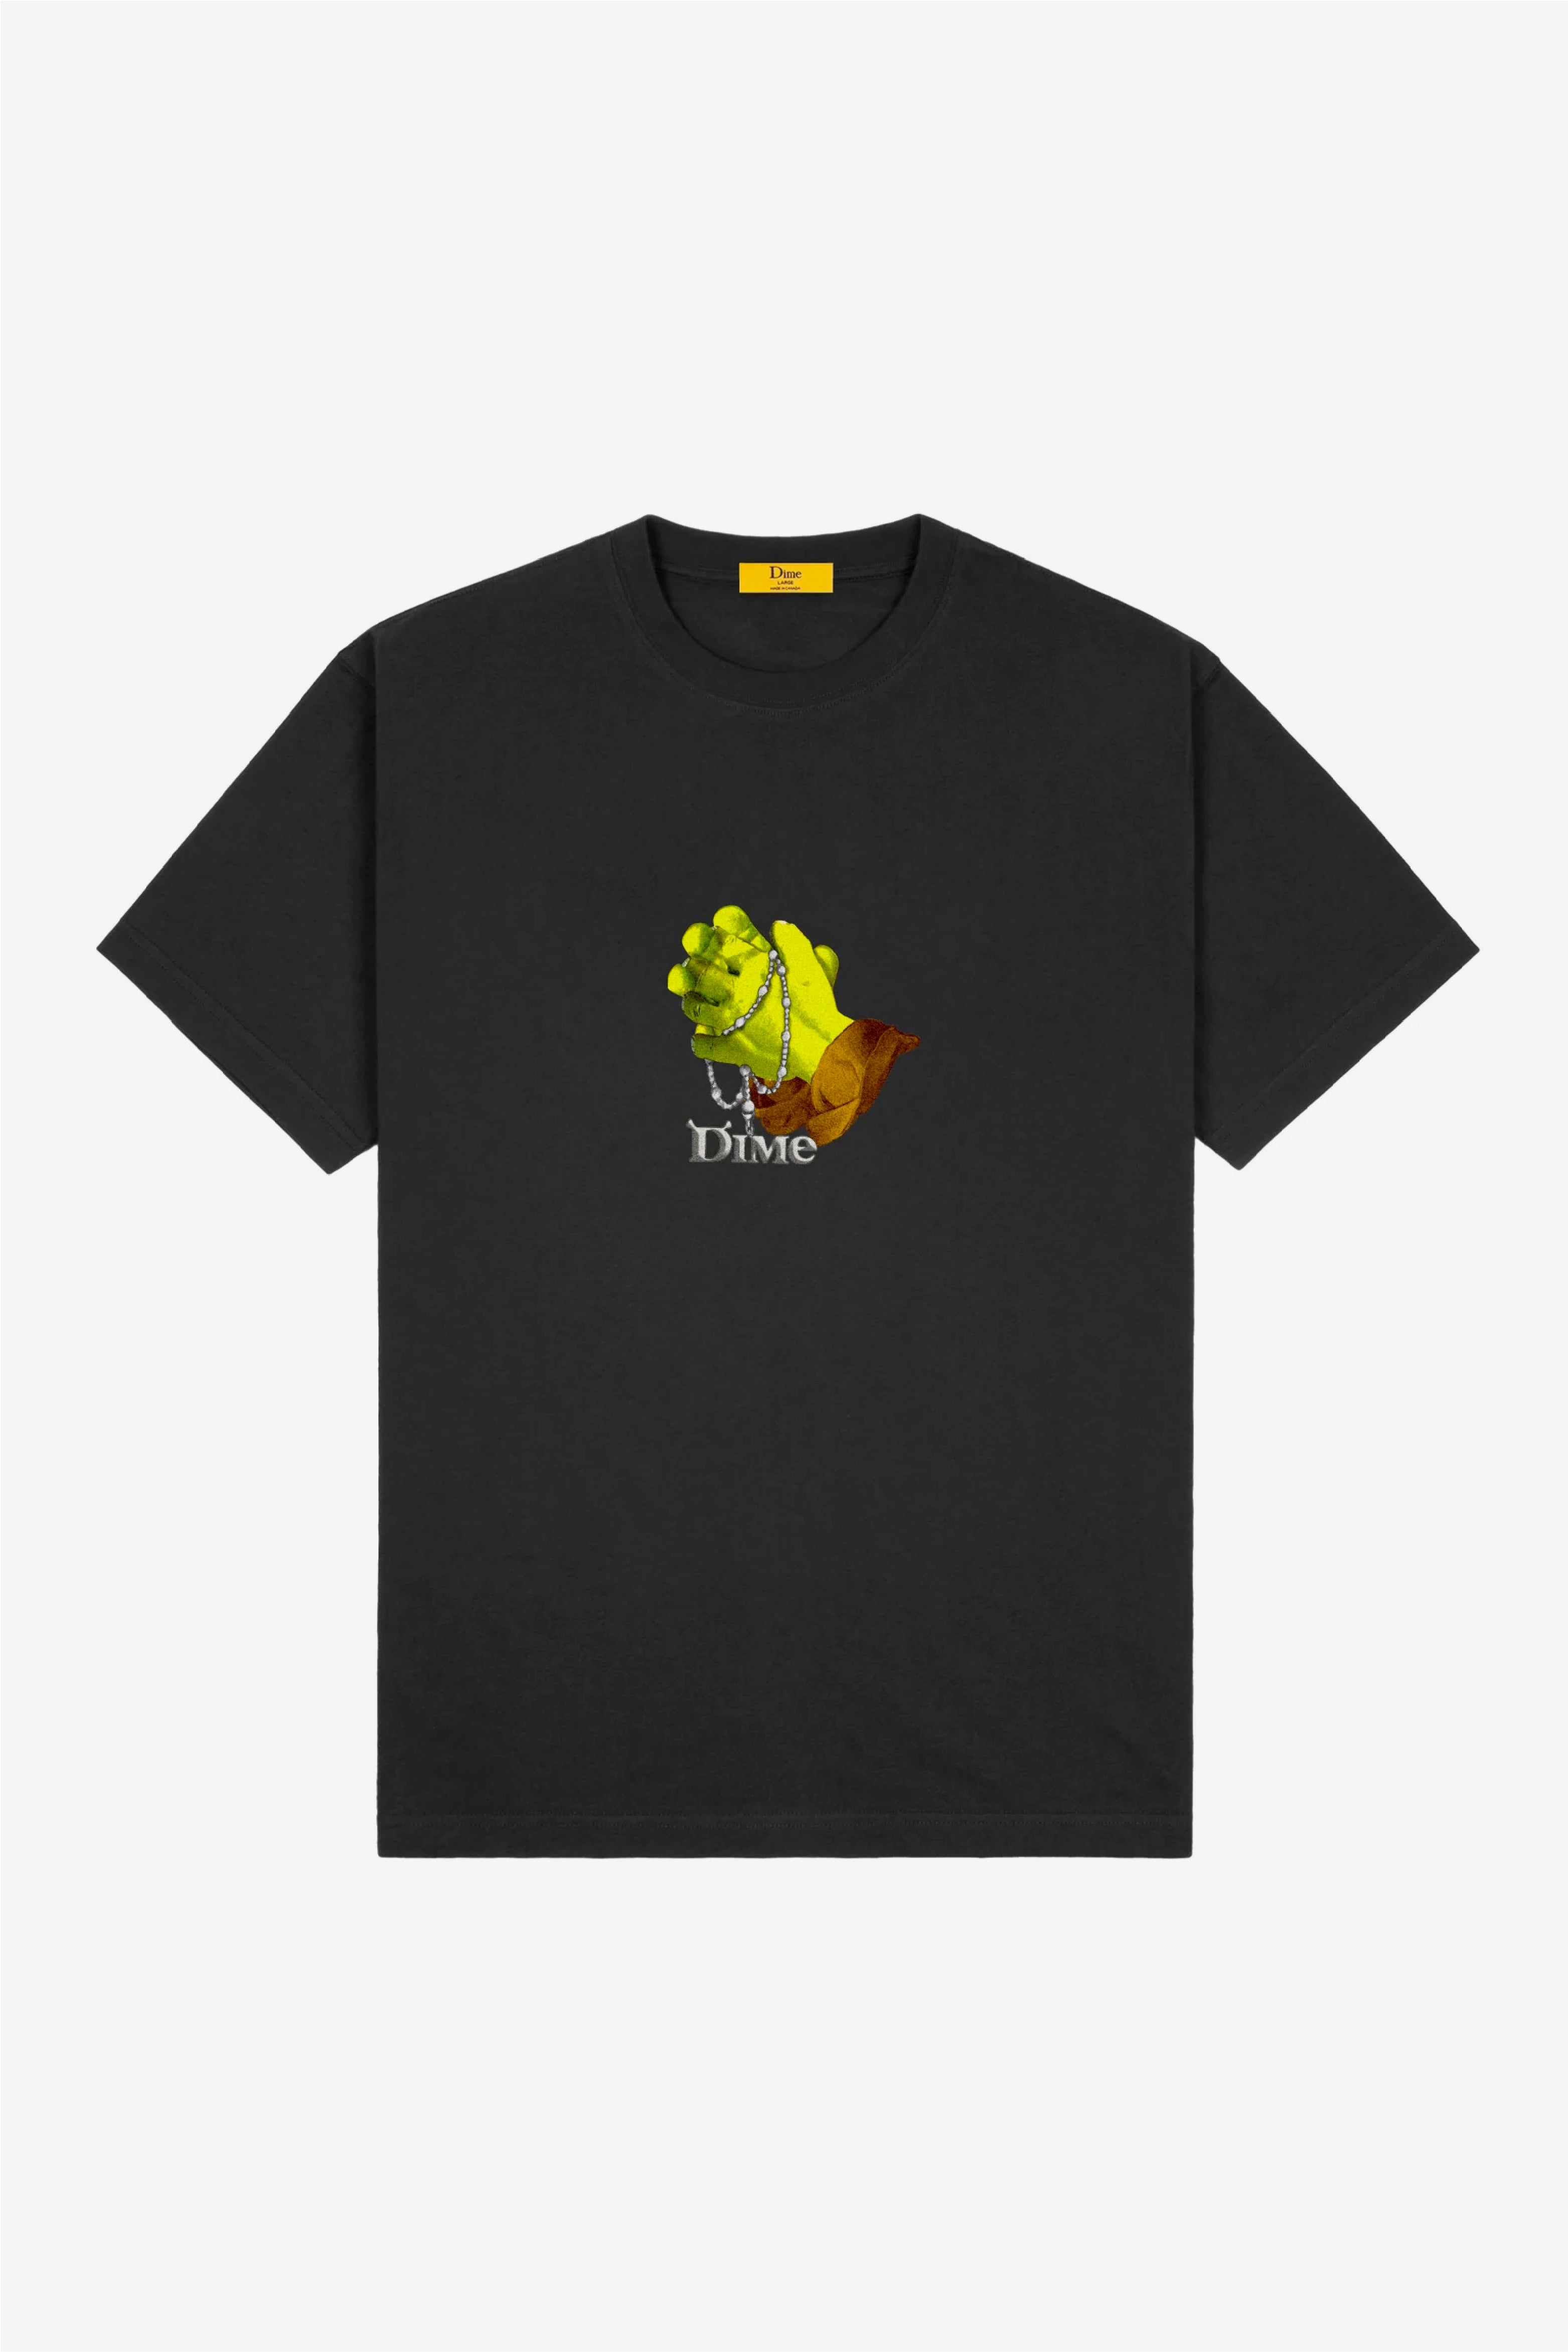 Selectshop FRAME - DIME Swamp Tee T-Shirts Dubai